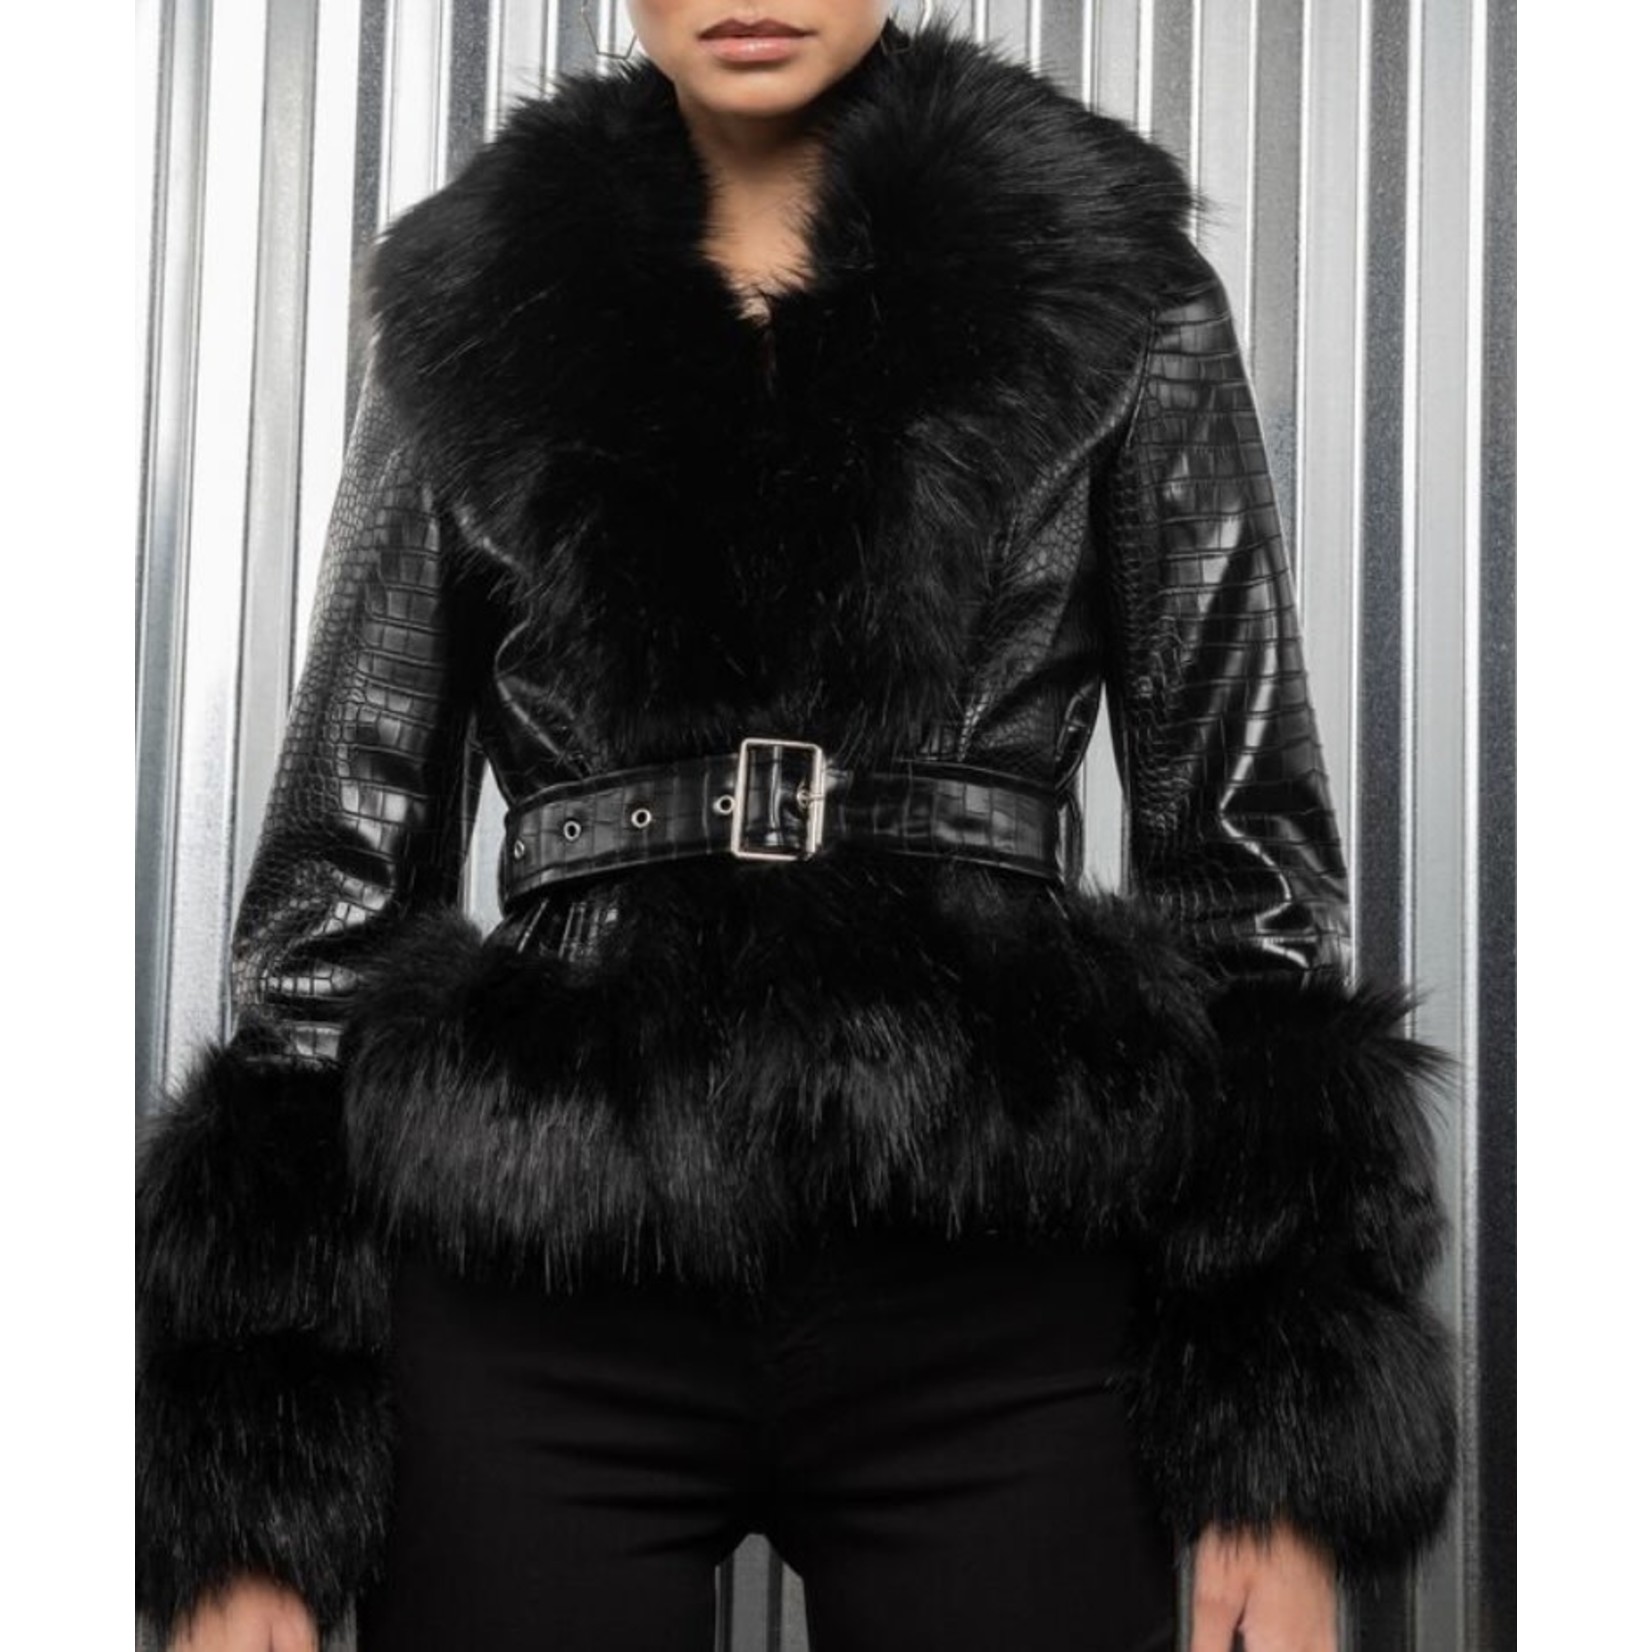 Black Faux Fur - She's Fashionable